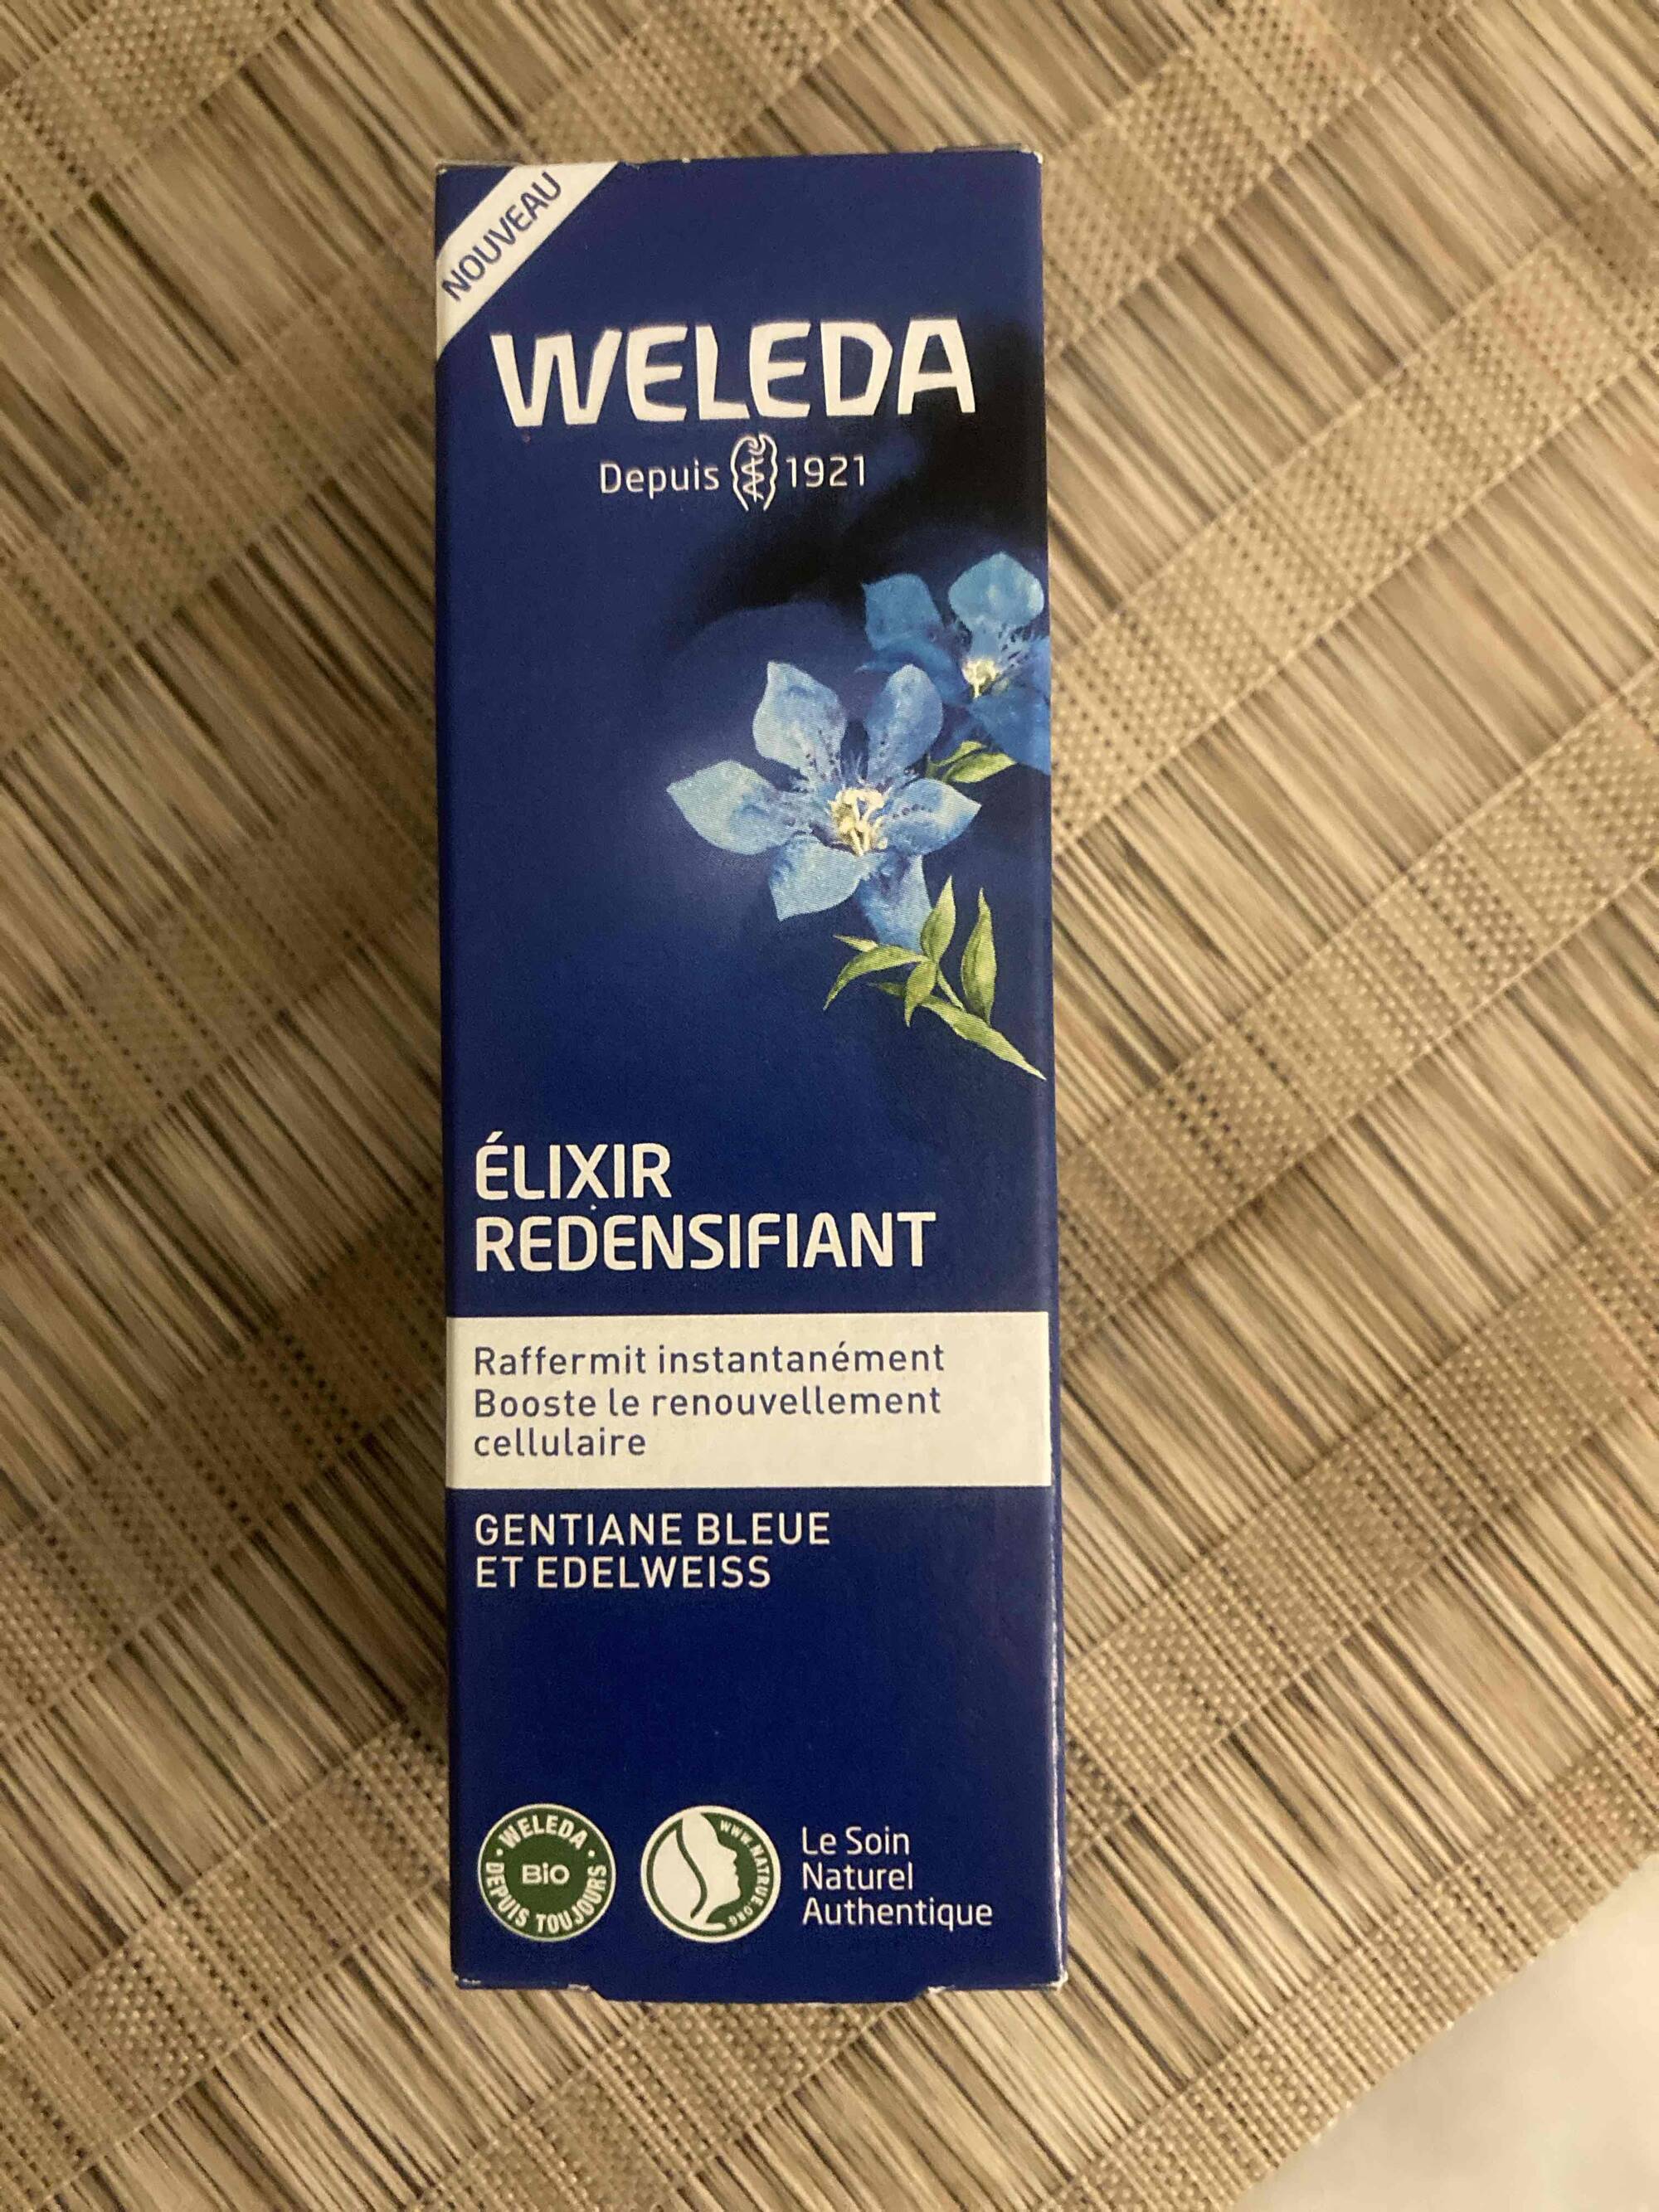 WELEDA - Gentiane bleue et edelweiss - Élixir redensifiant